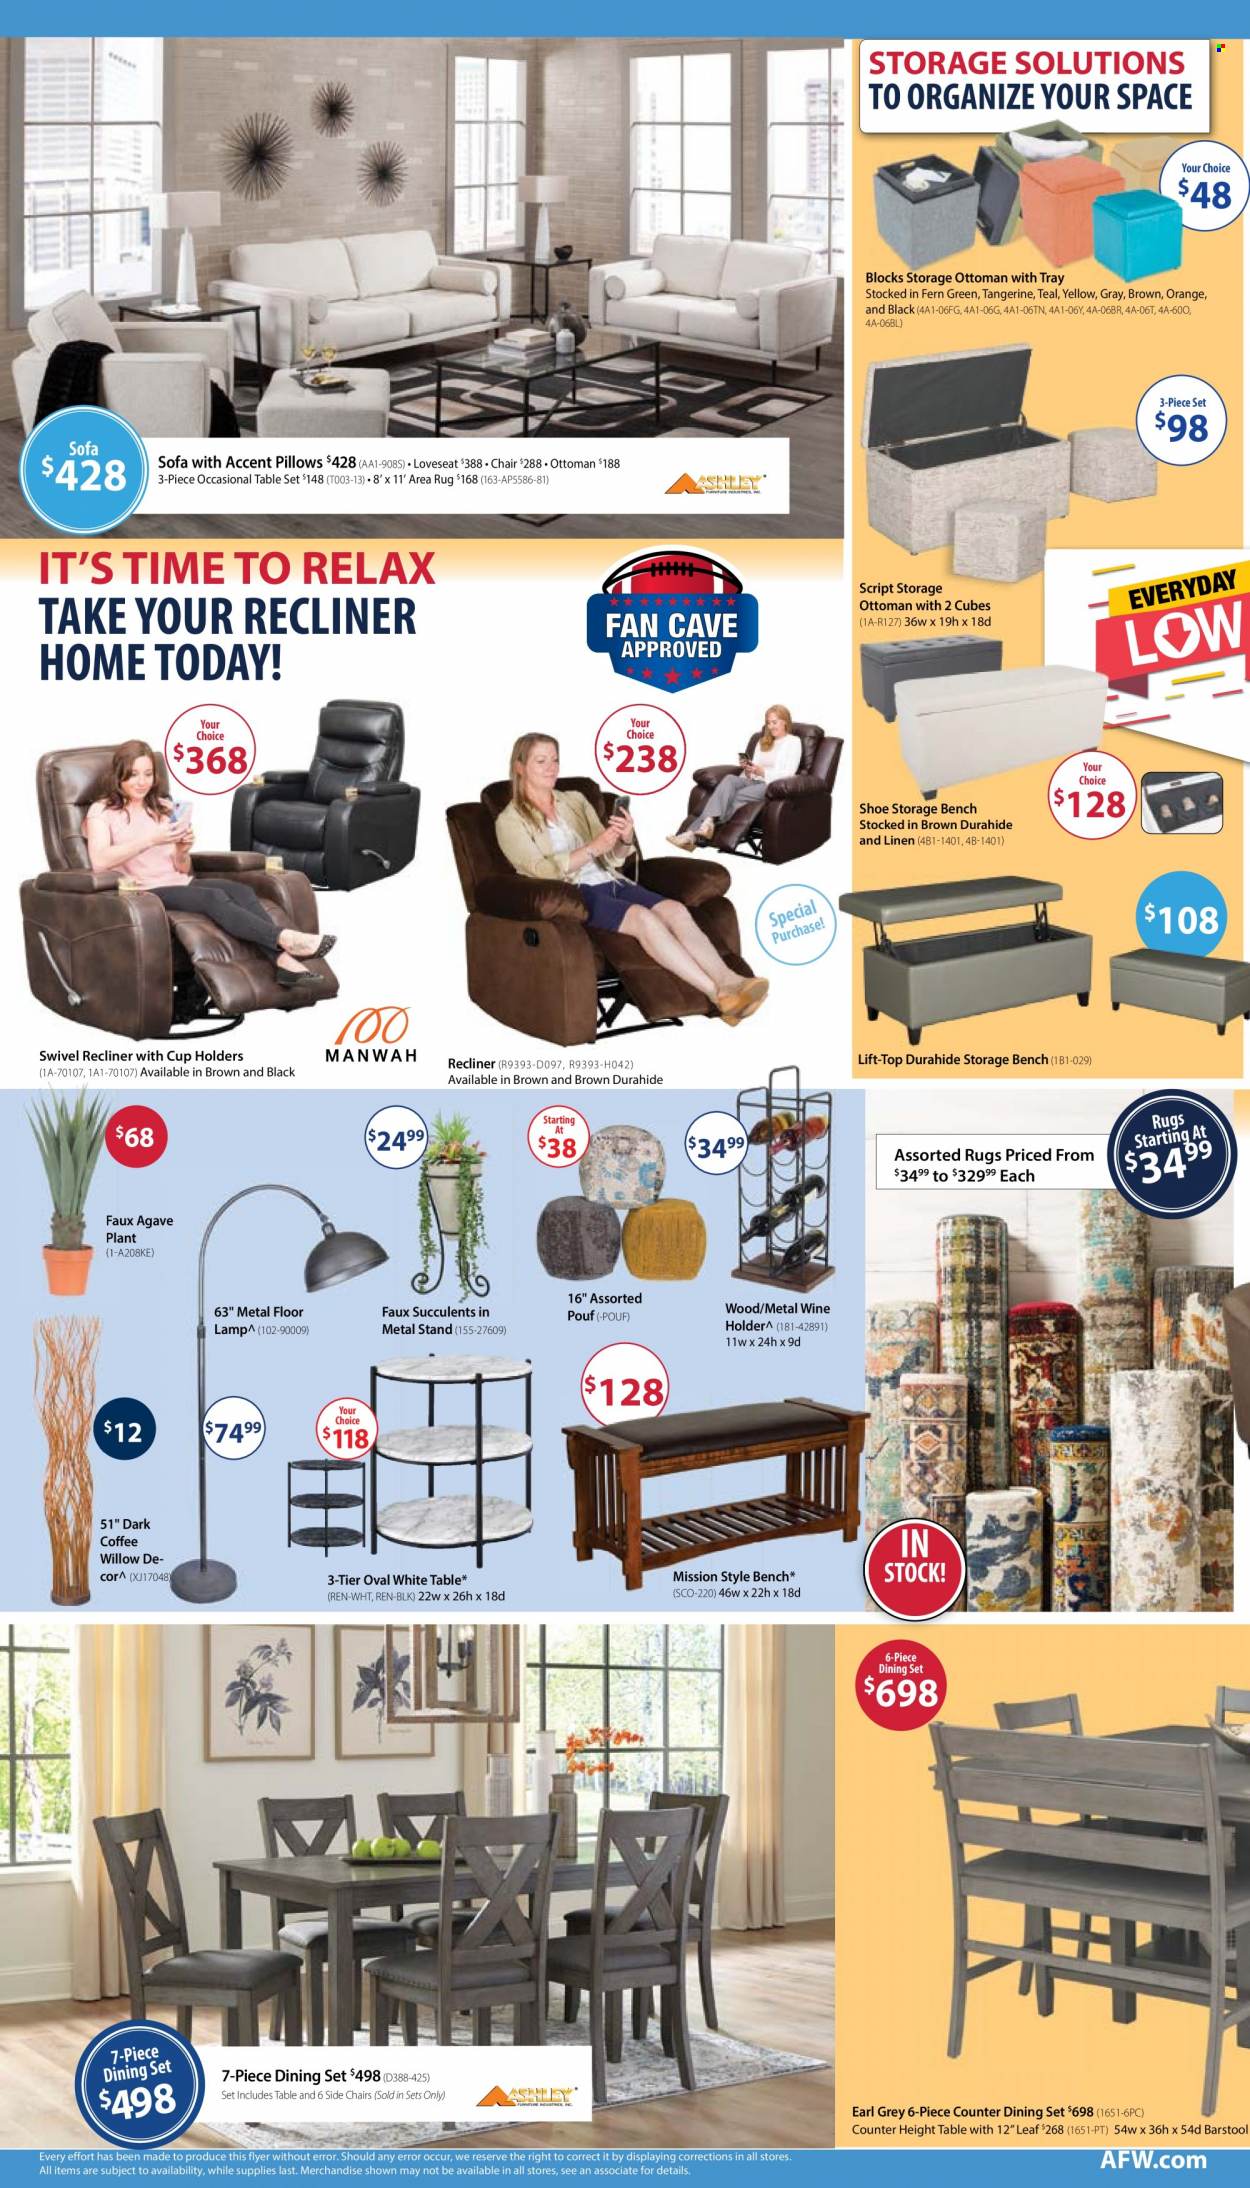 American Furniture Warehouse ad .